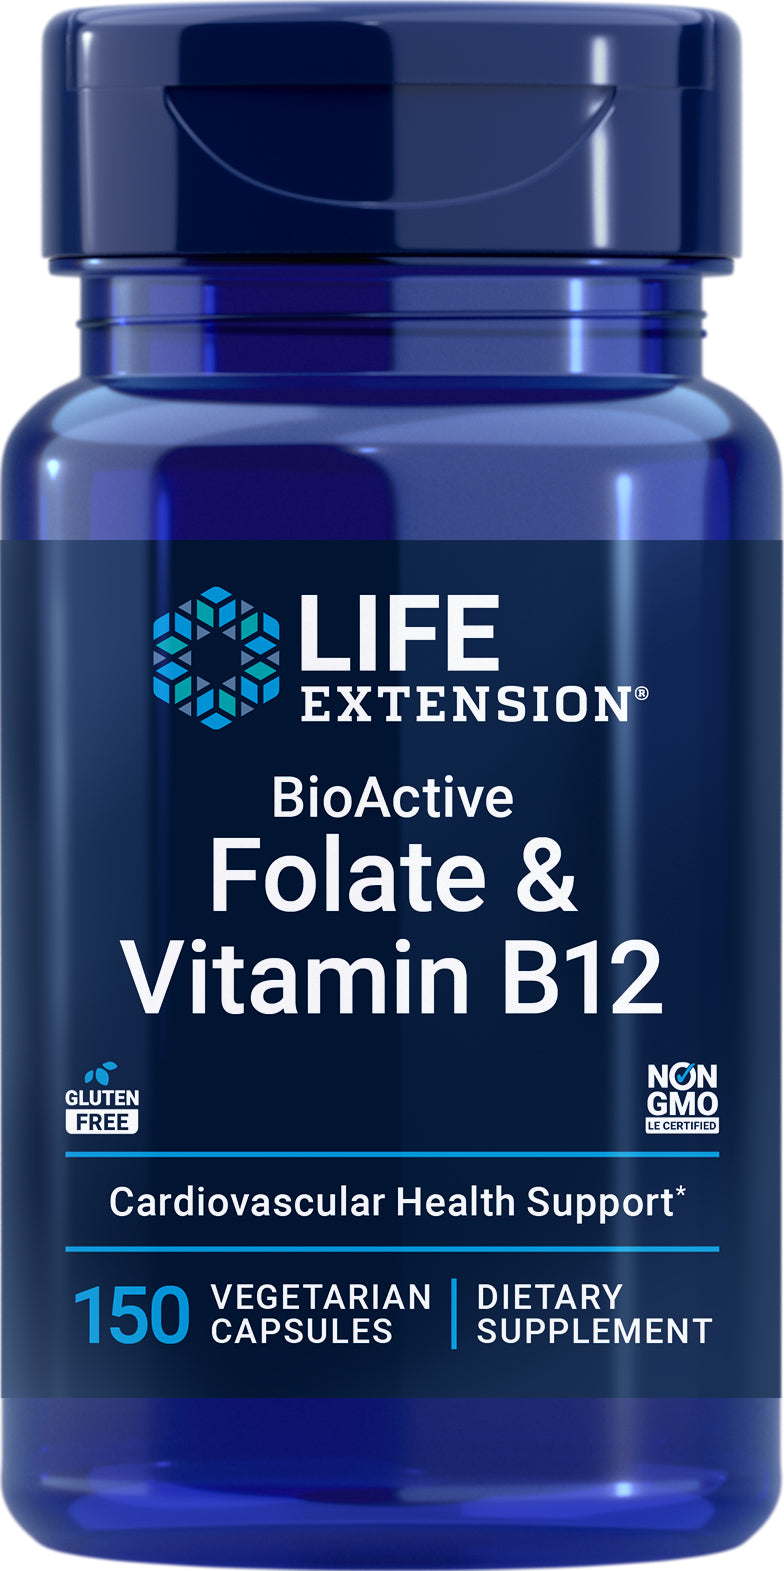 BioActive Folate & Vitamin B12 90 veg caps by Life Extension